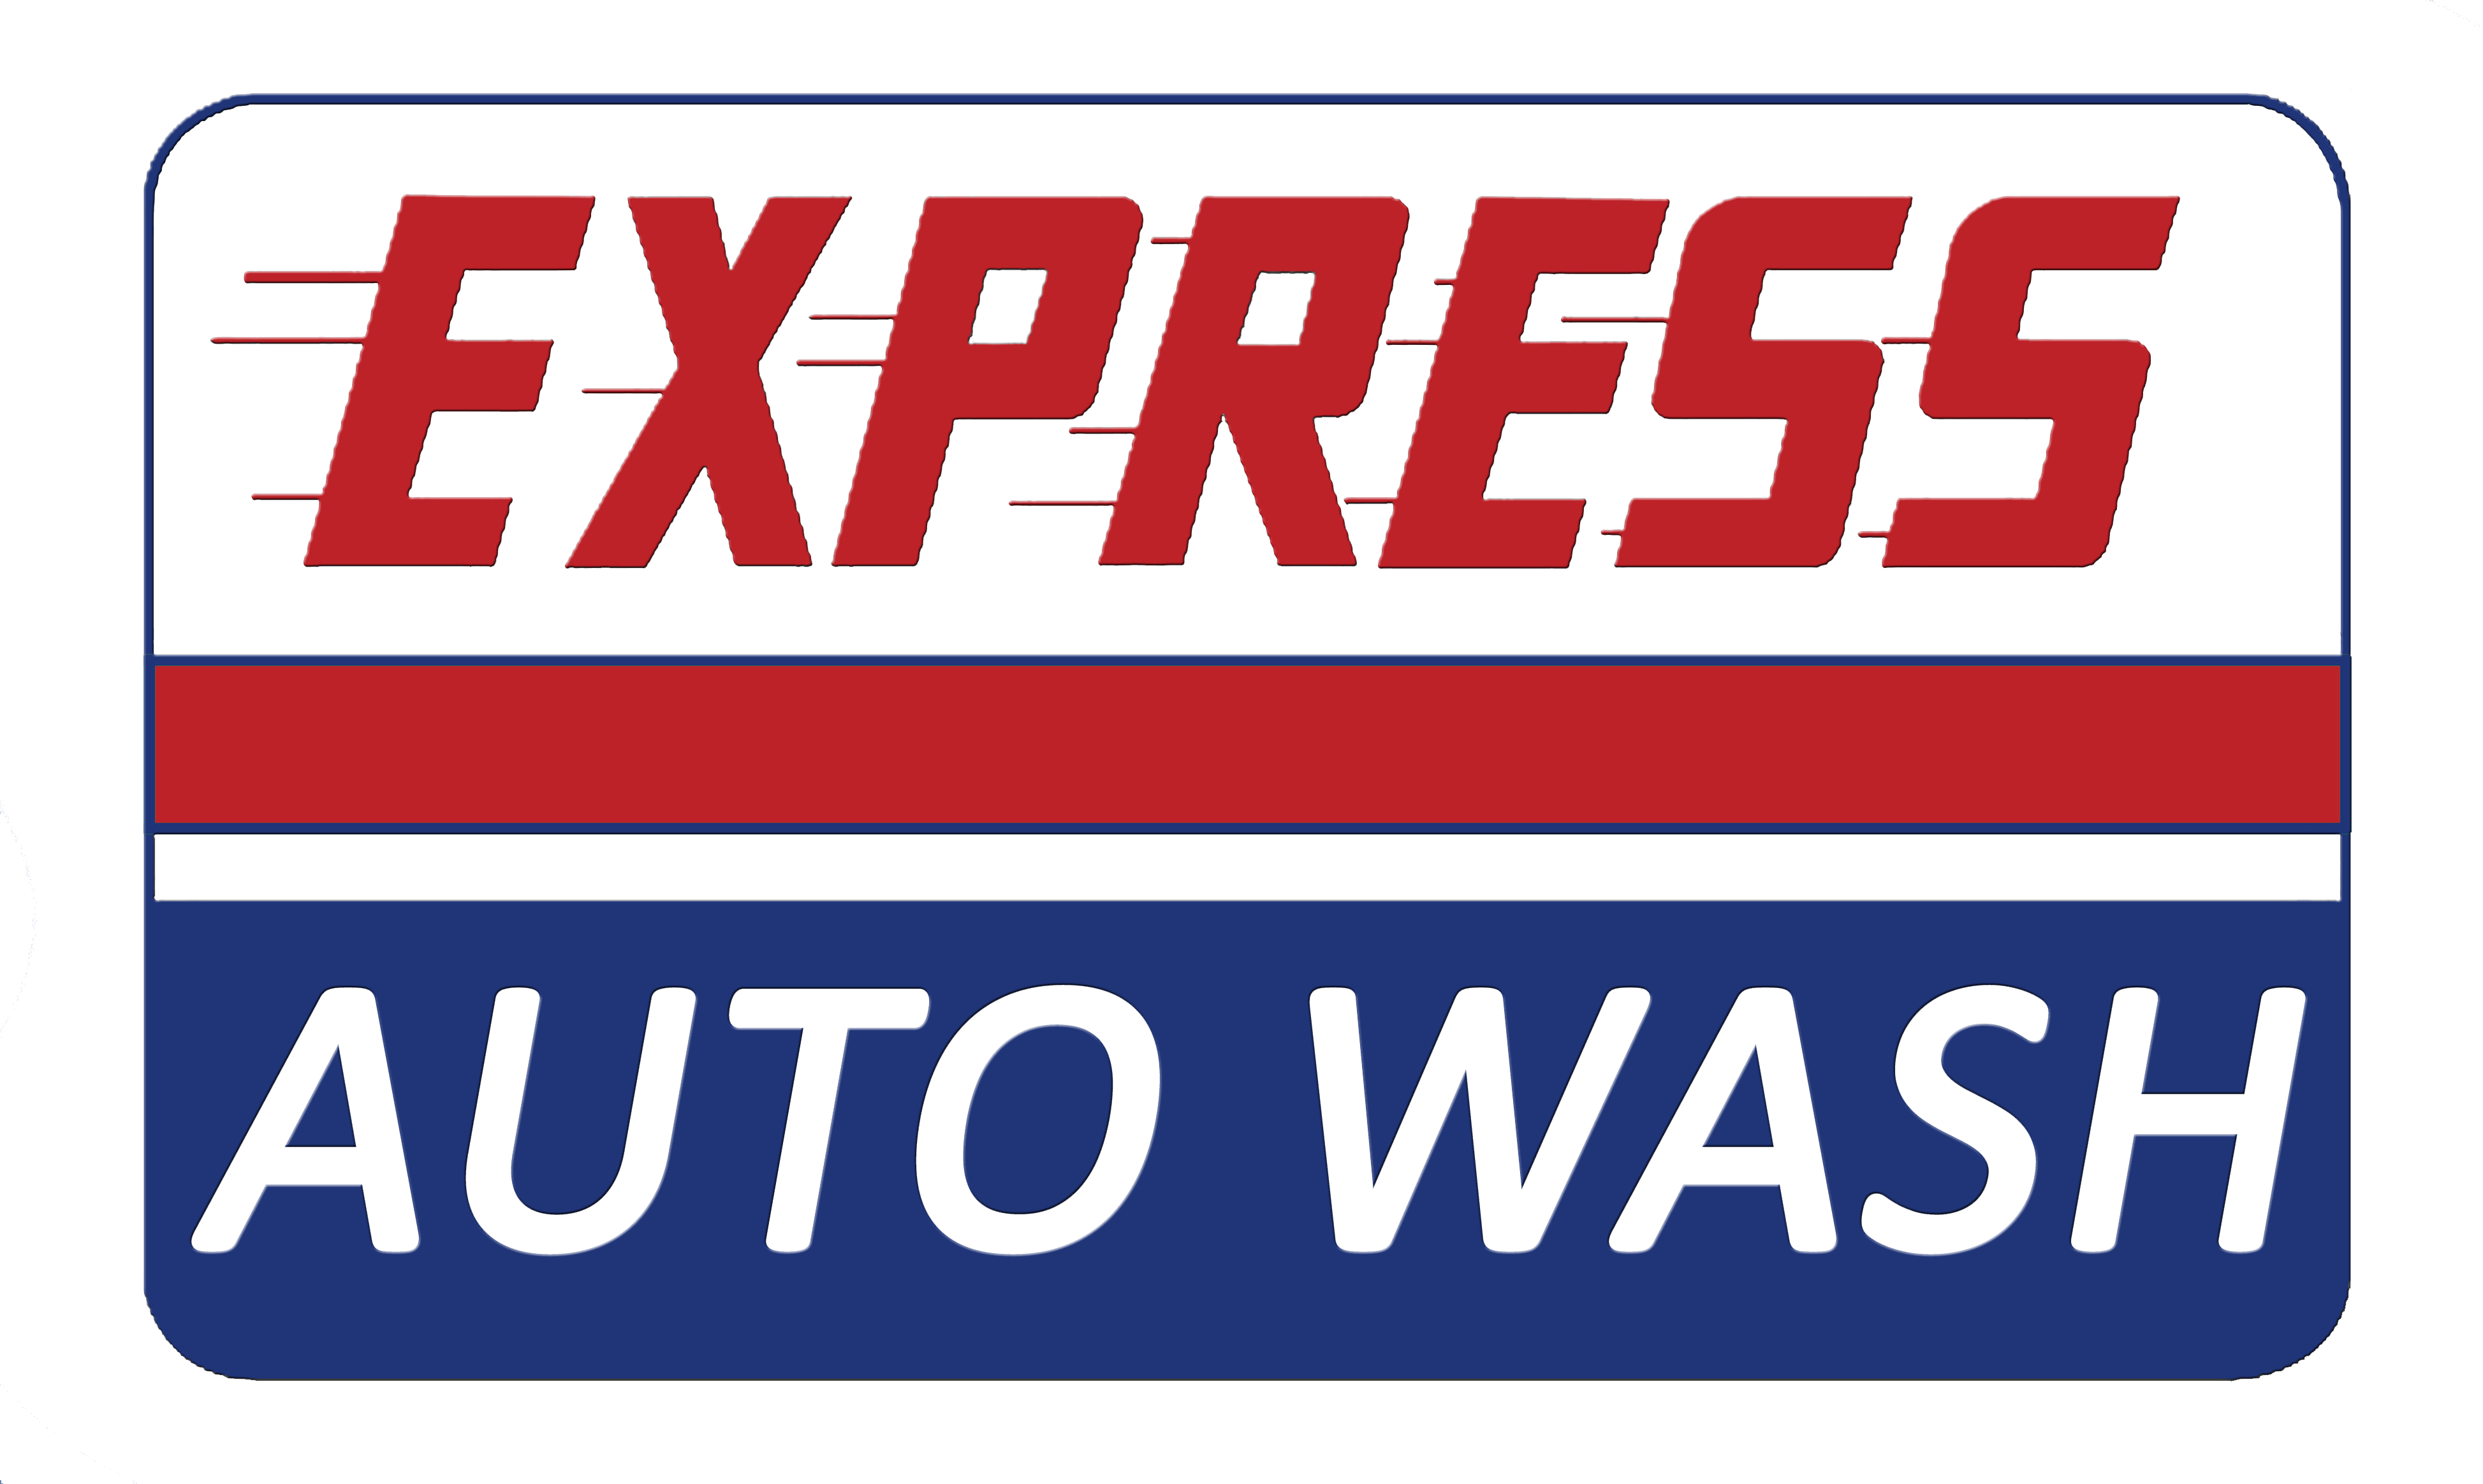 Express Auto Wash